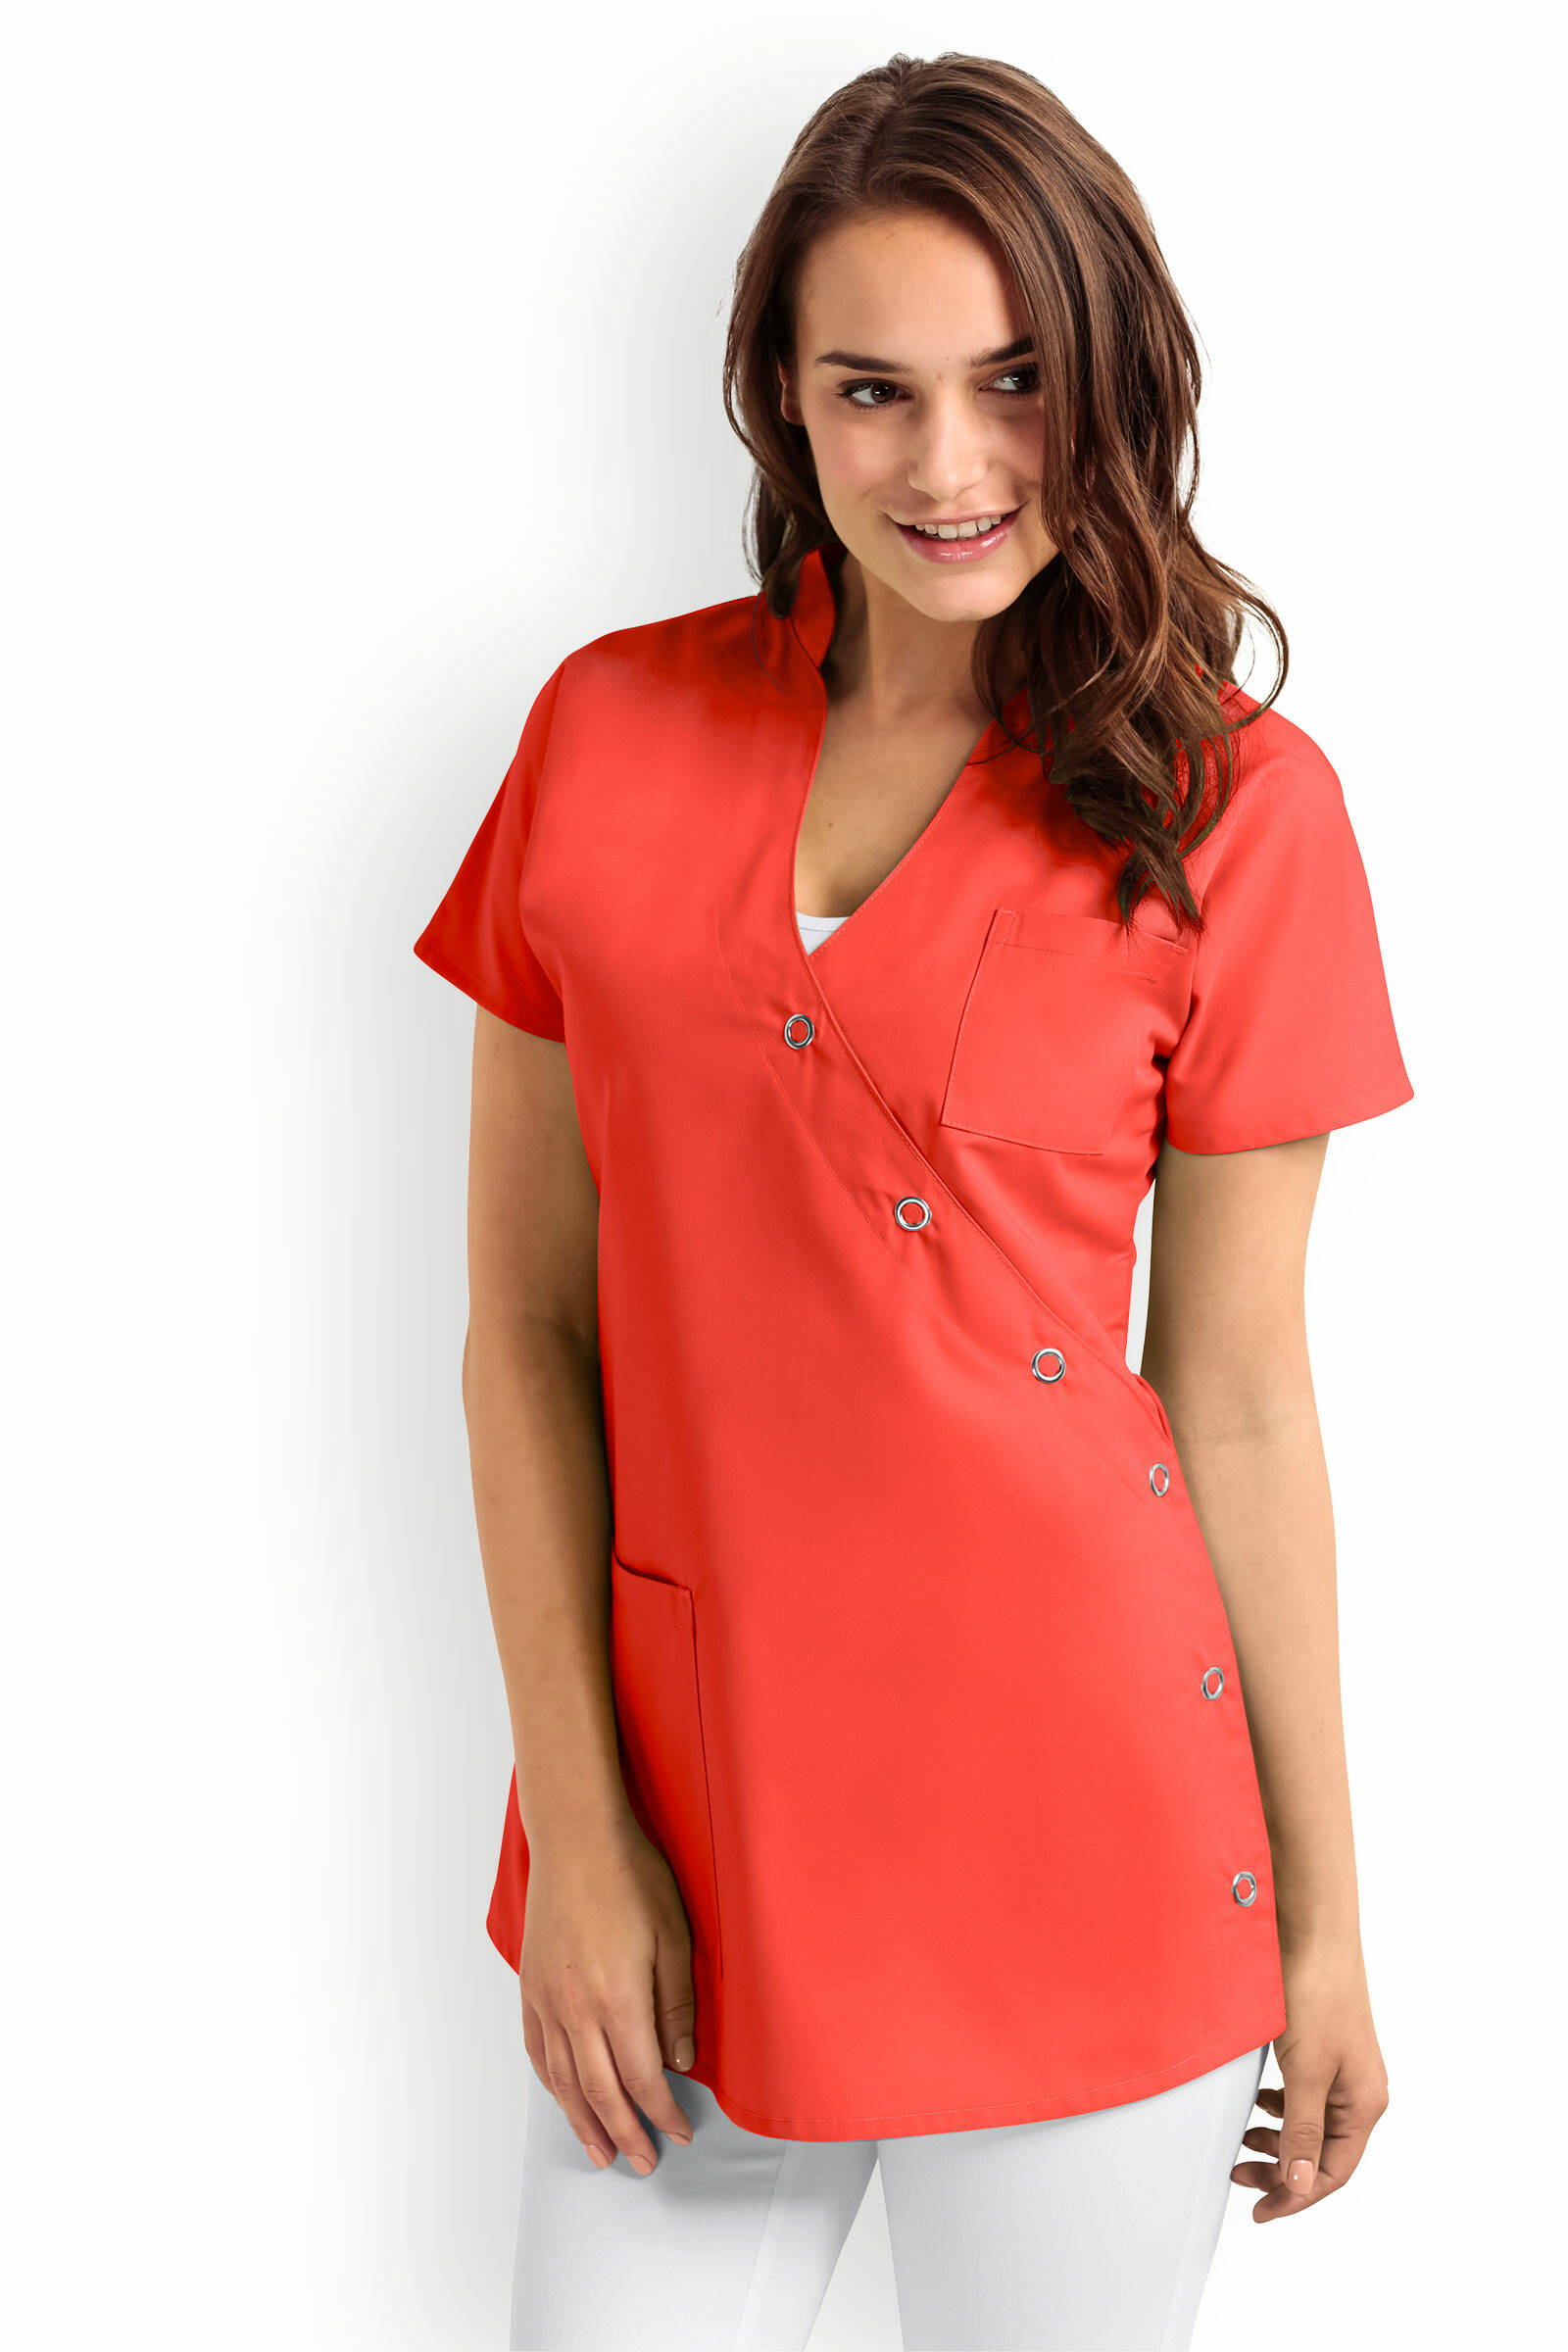 CLINIC DRESS Blouse médicale femme Taille 46 mandarine  - Jaune - Size: 48 - femme